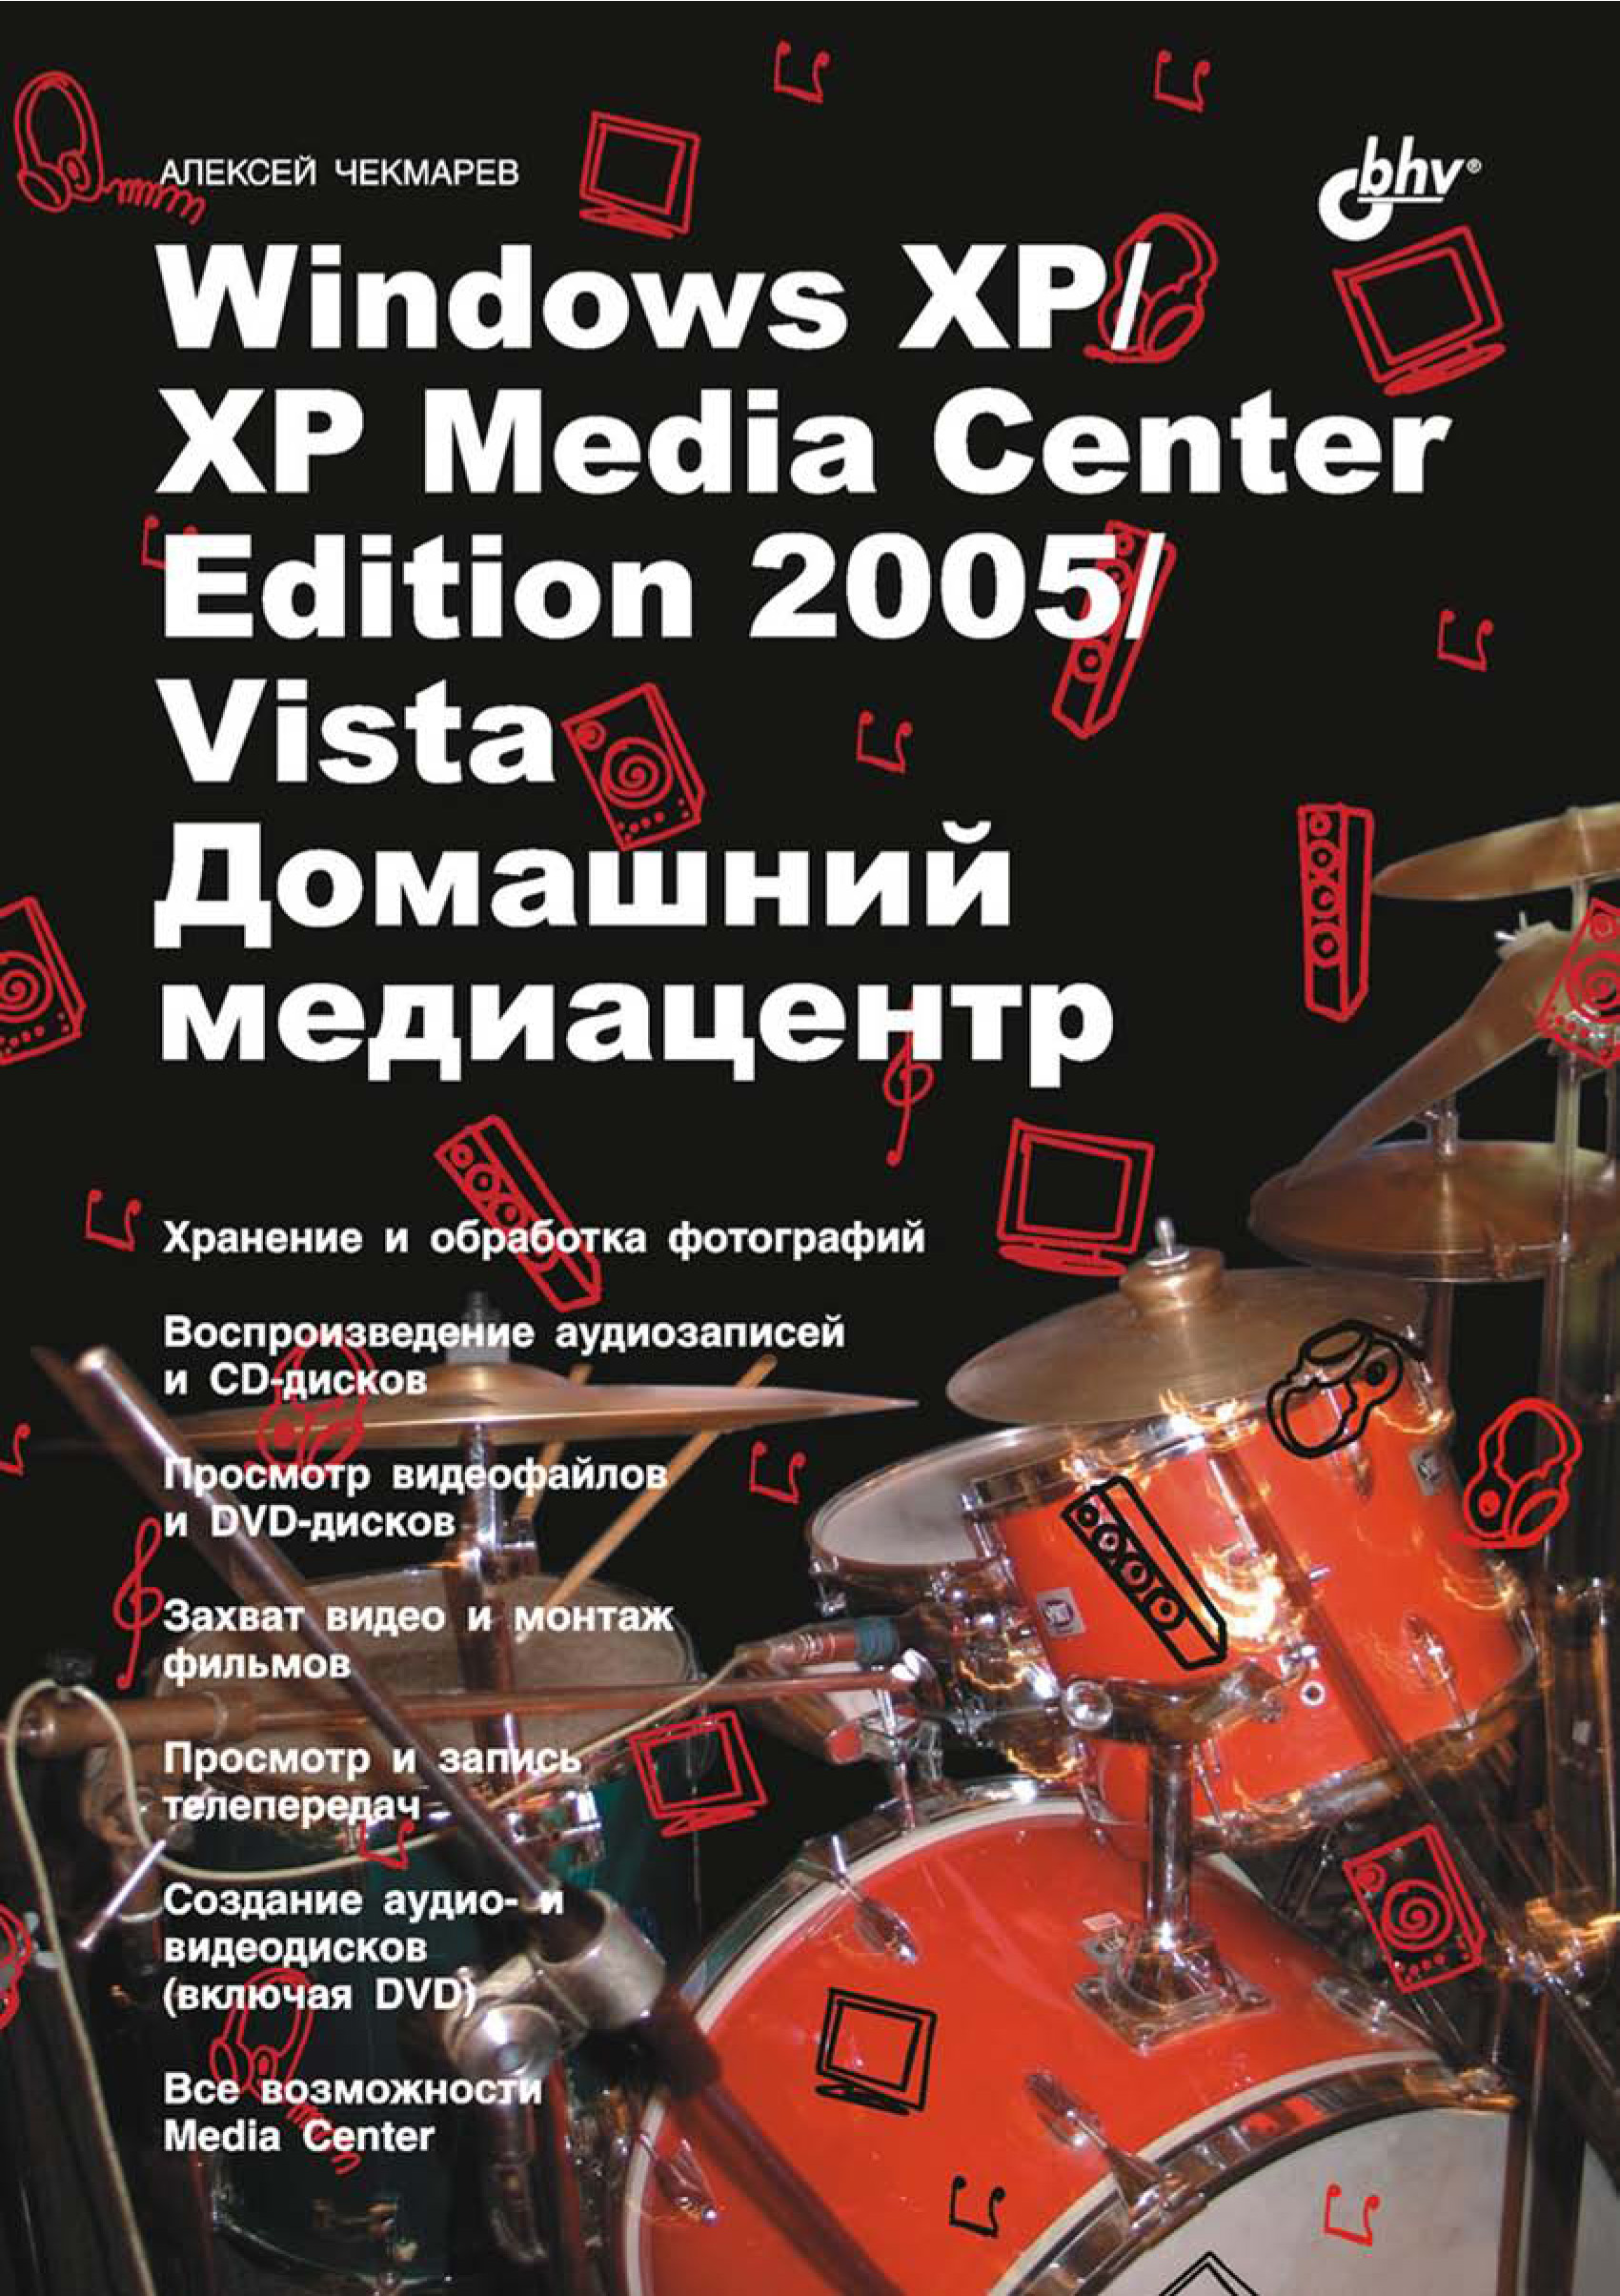 Windows XP / XP Media Center Edition / Vista.Домашний медиацентр